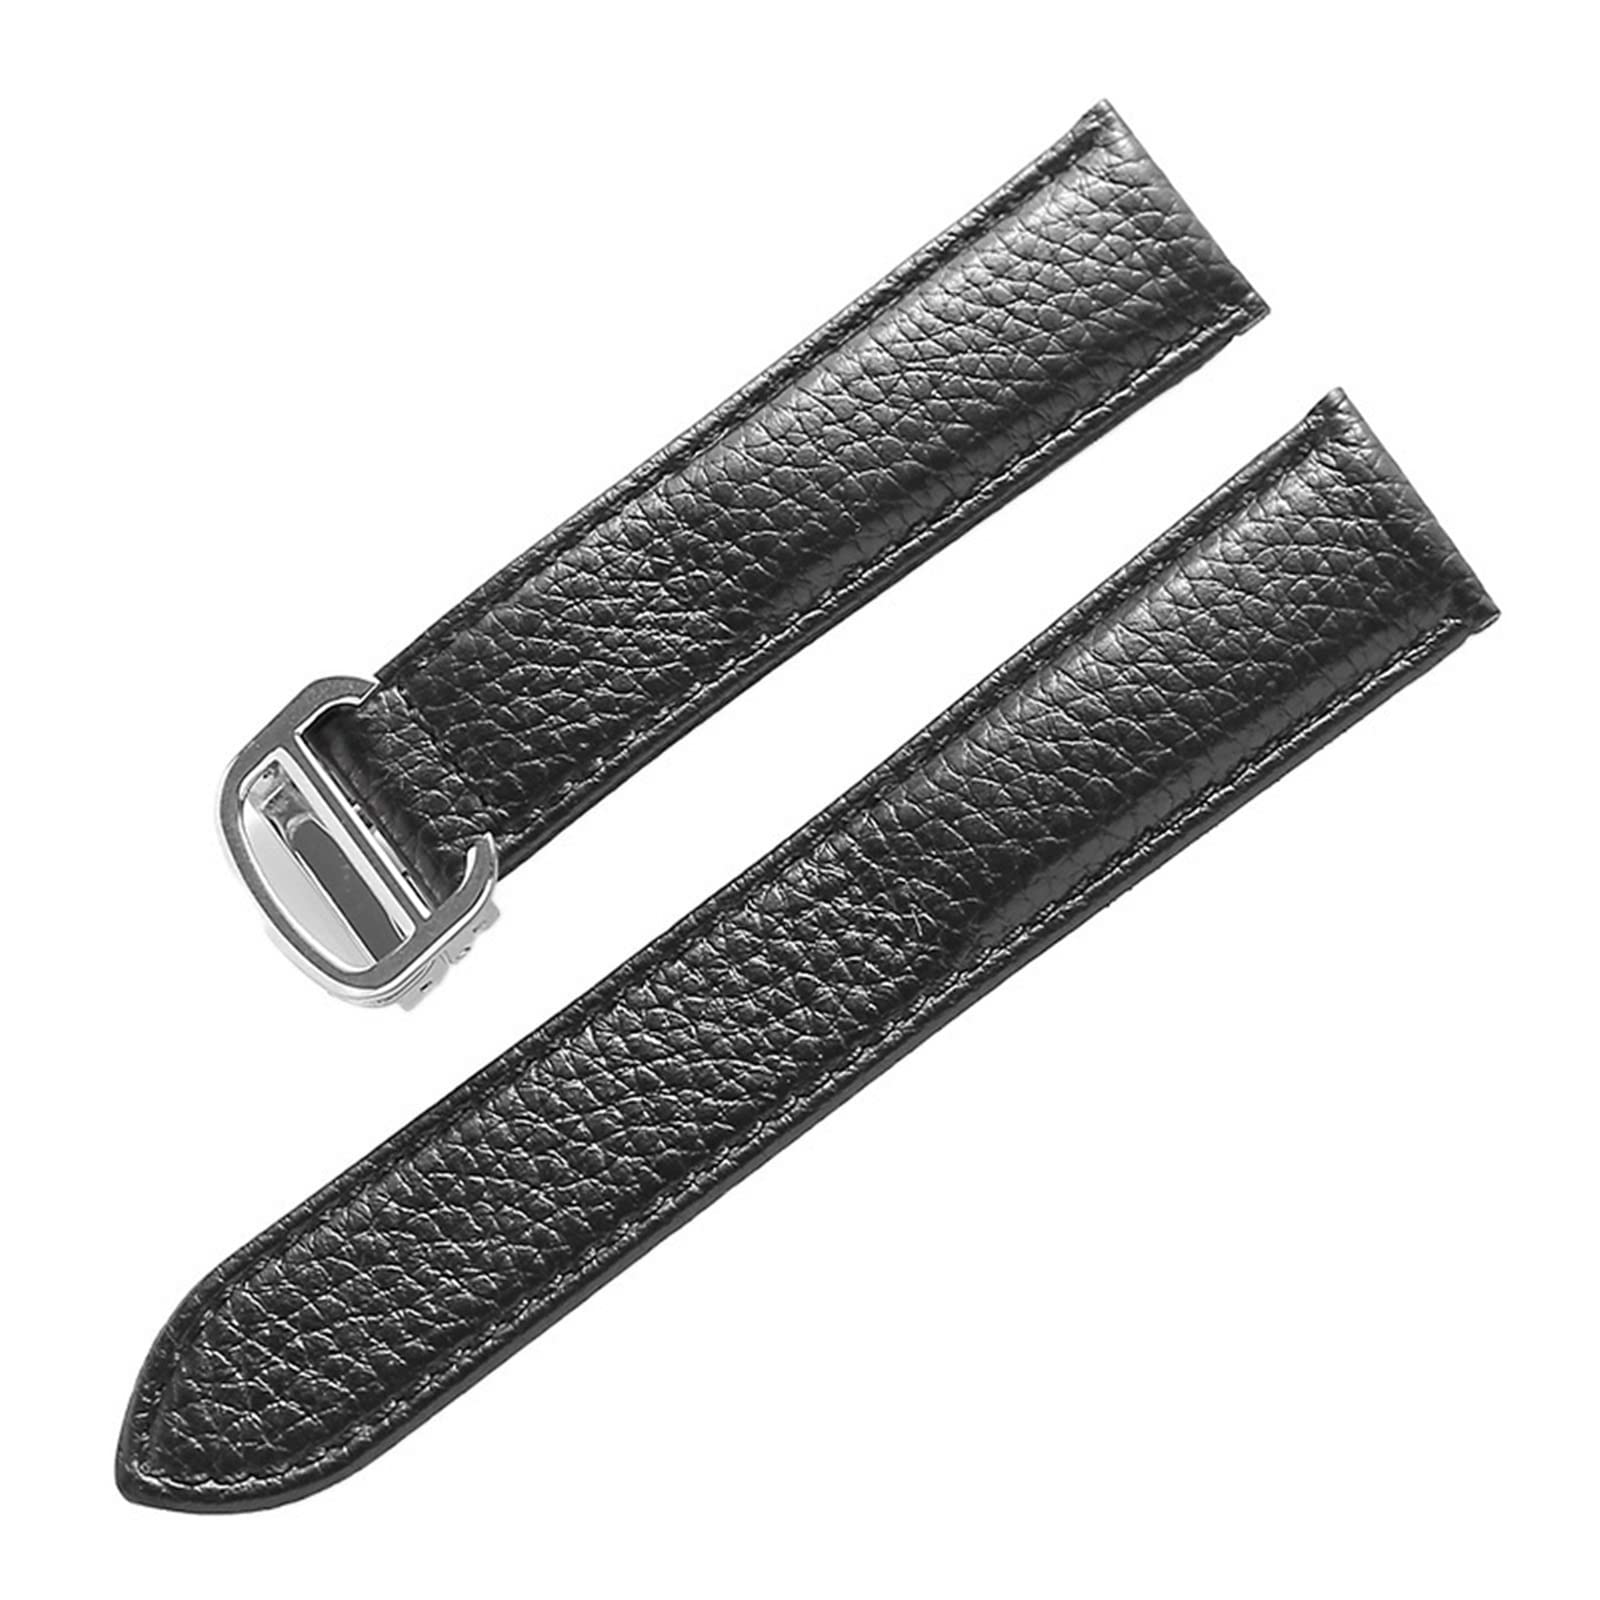 Wscebck Watch Band for Cartier Tank Solo Men Lady Deployant Clasp Watch Strap Genuine Leather Soft Watch Bracelet Belt 20mm 22mm 23mm (Color : Black-Silver, Size : 20mm)